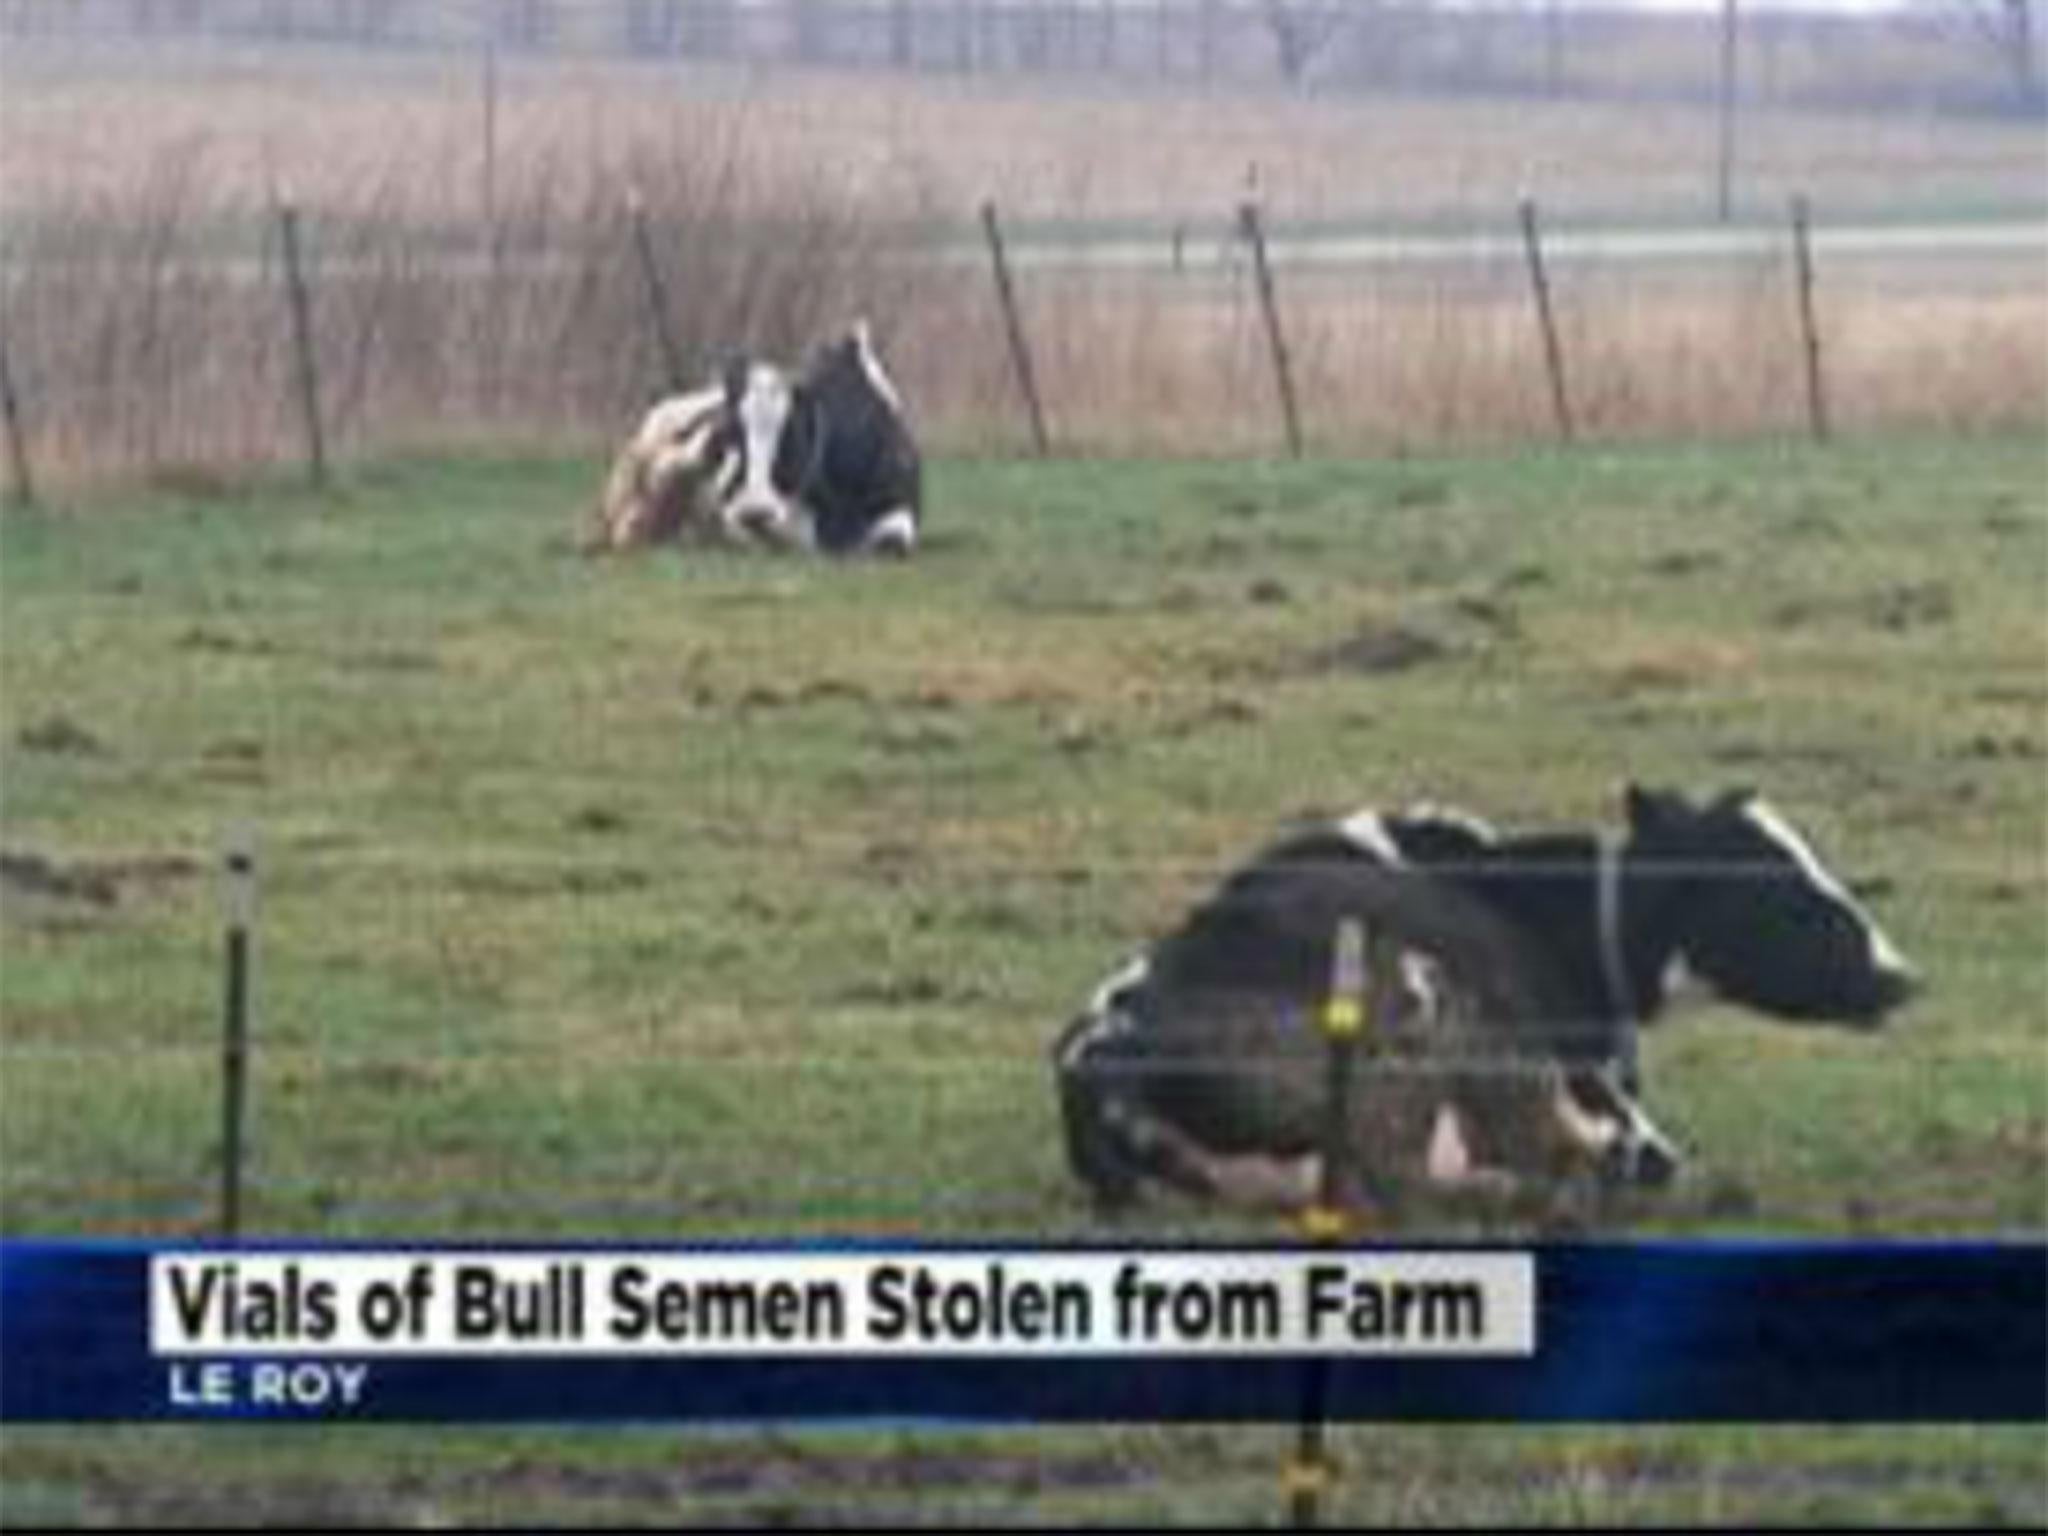 Police said the bull semen was surprisingly valuable